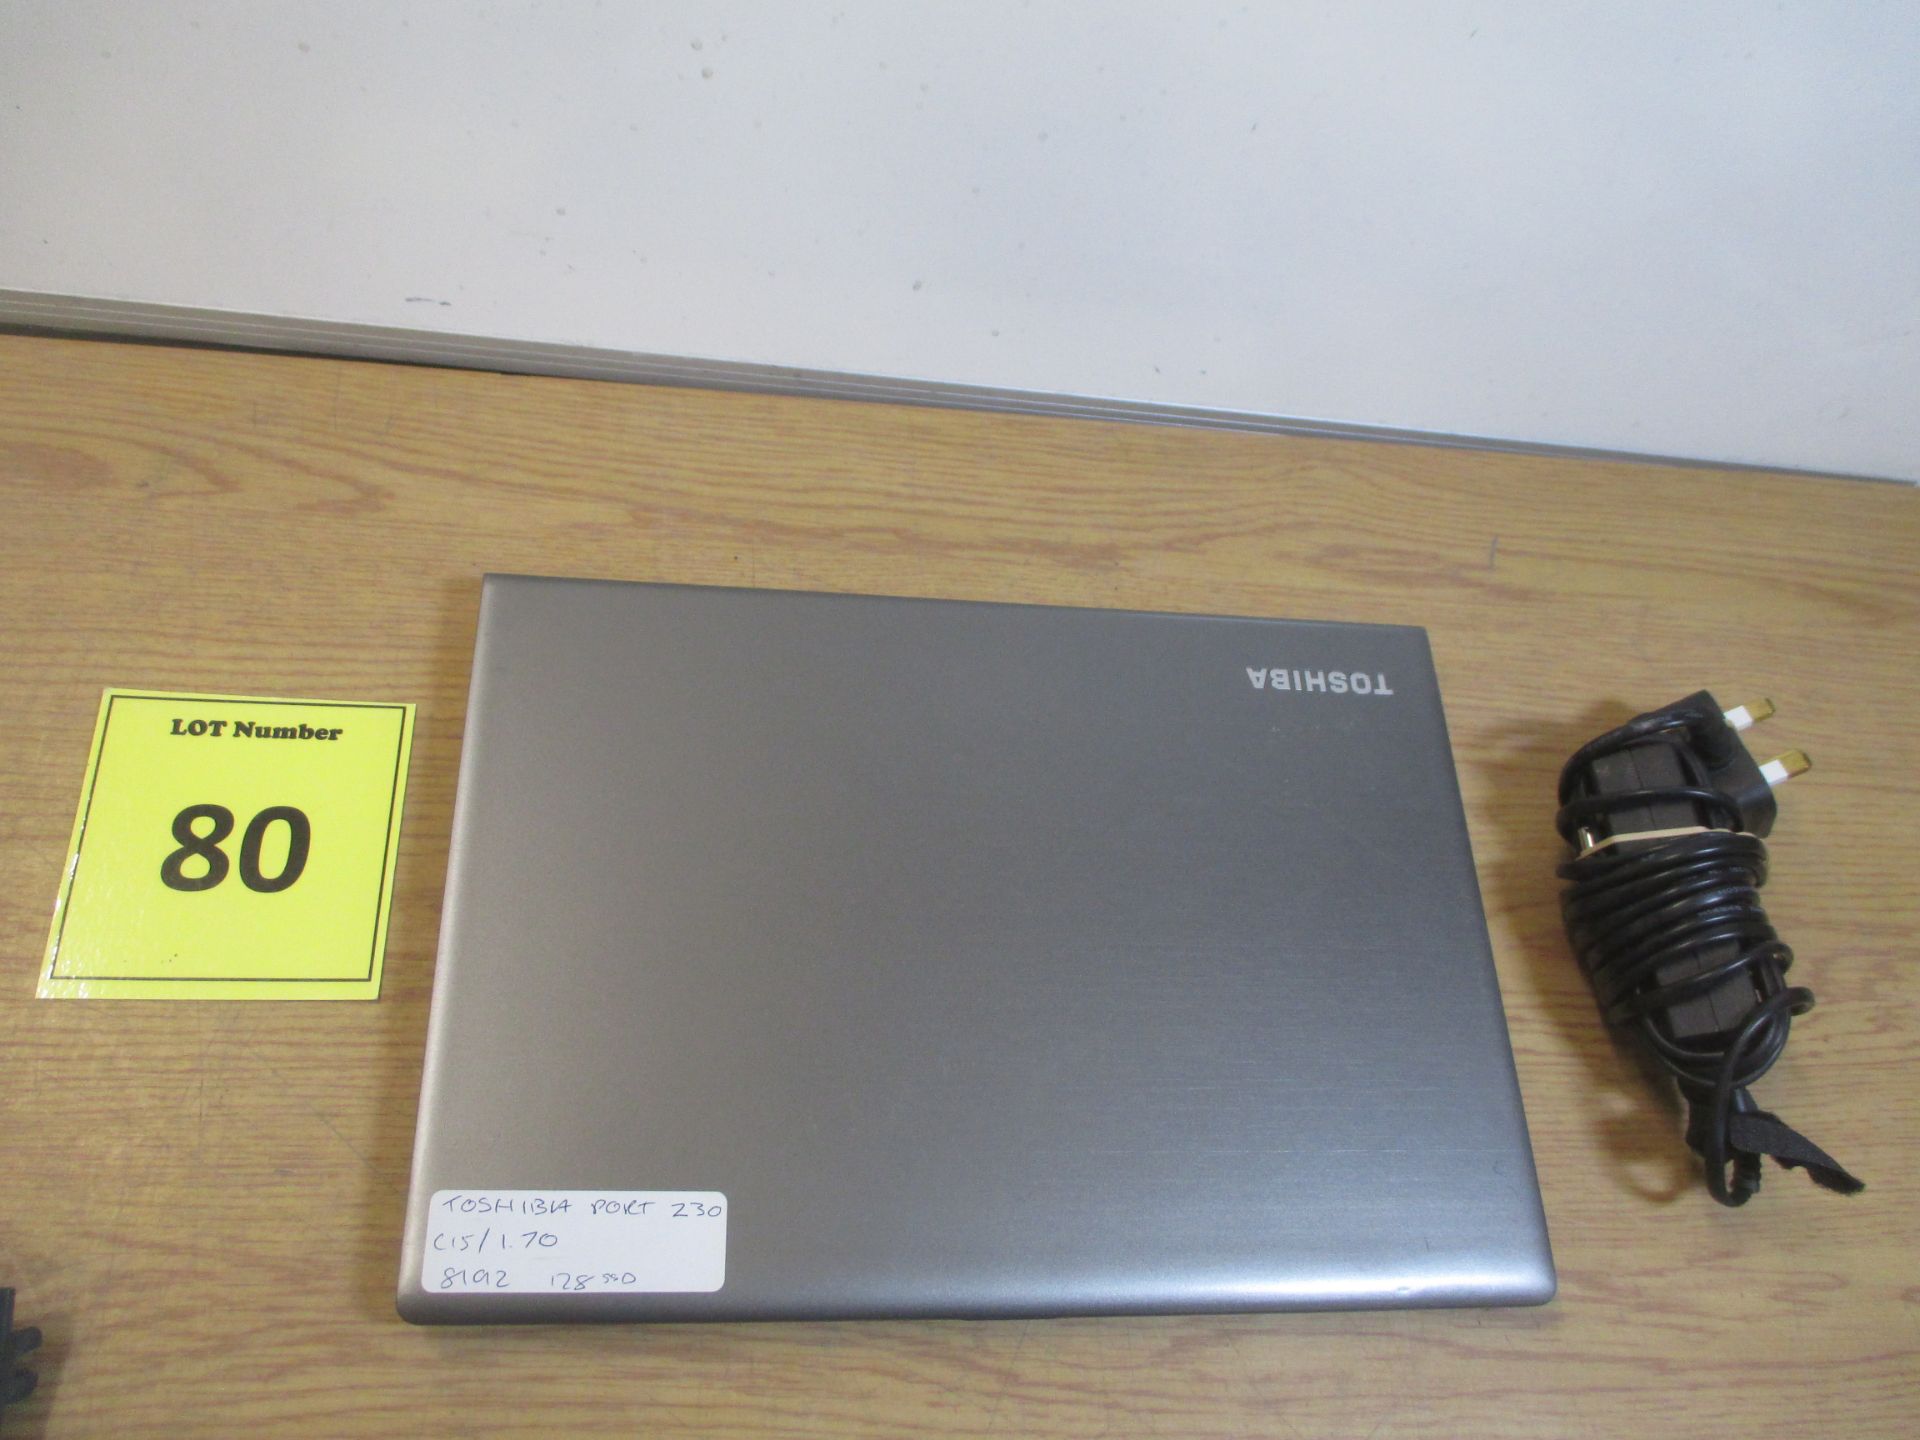 TOSHIBA PORTEGE Z30 LAPTOP. CORE i5 1.7GHZ PROCESSOR, 8GB RAM, 128GB SOLID STATE HDD. WITH PSU & - Image 2 of 2